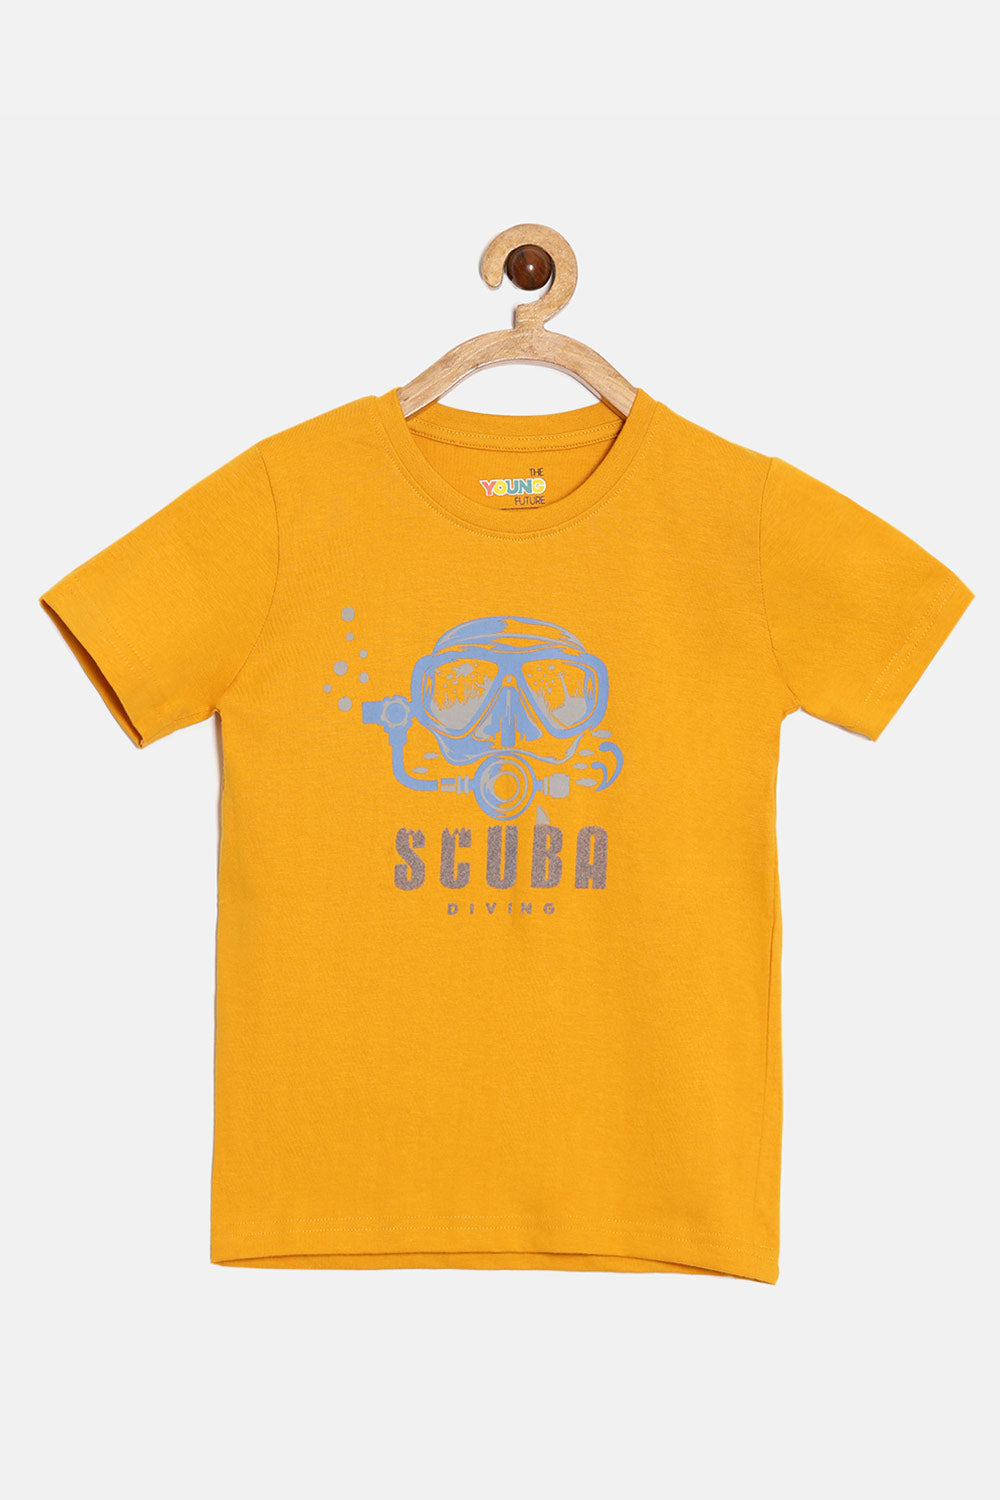 The Young Future - Boys T-shirt - Mustard  - BC10